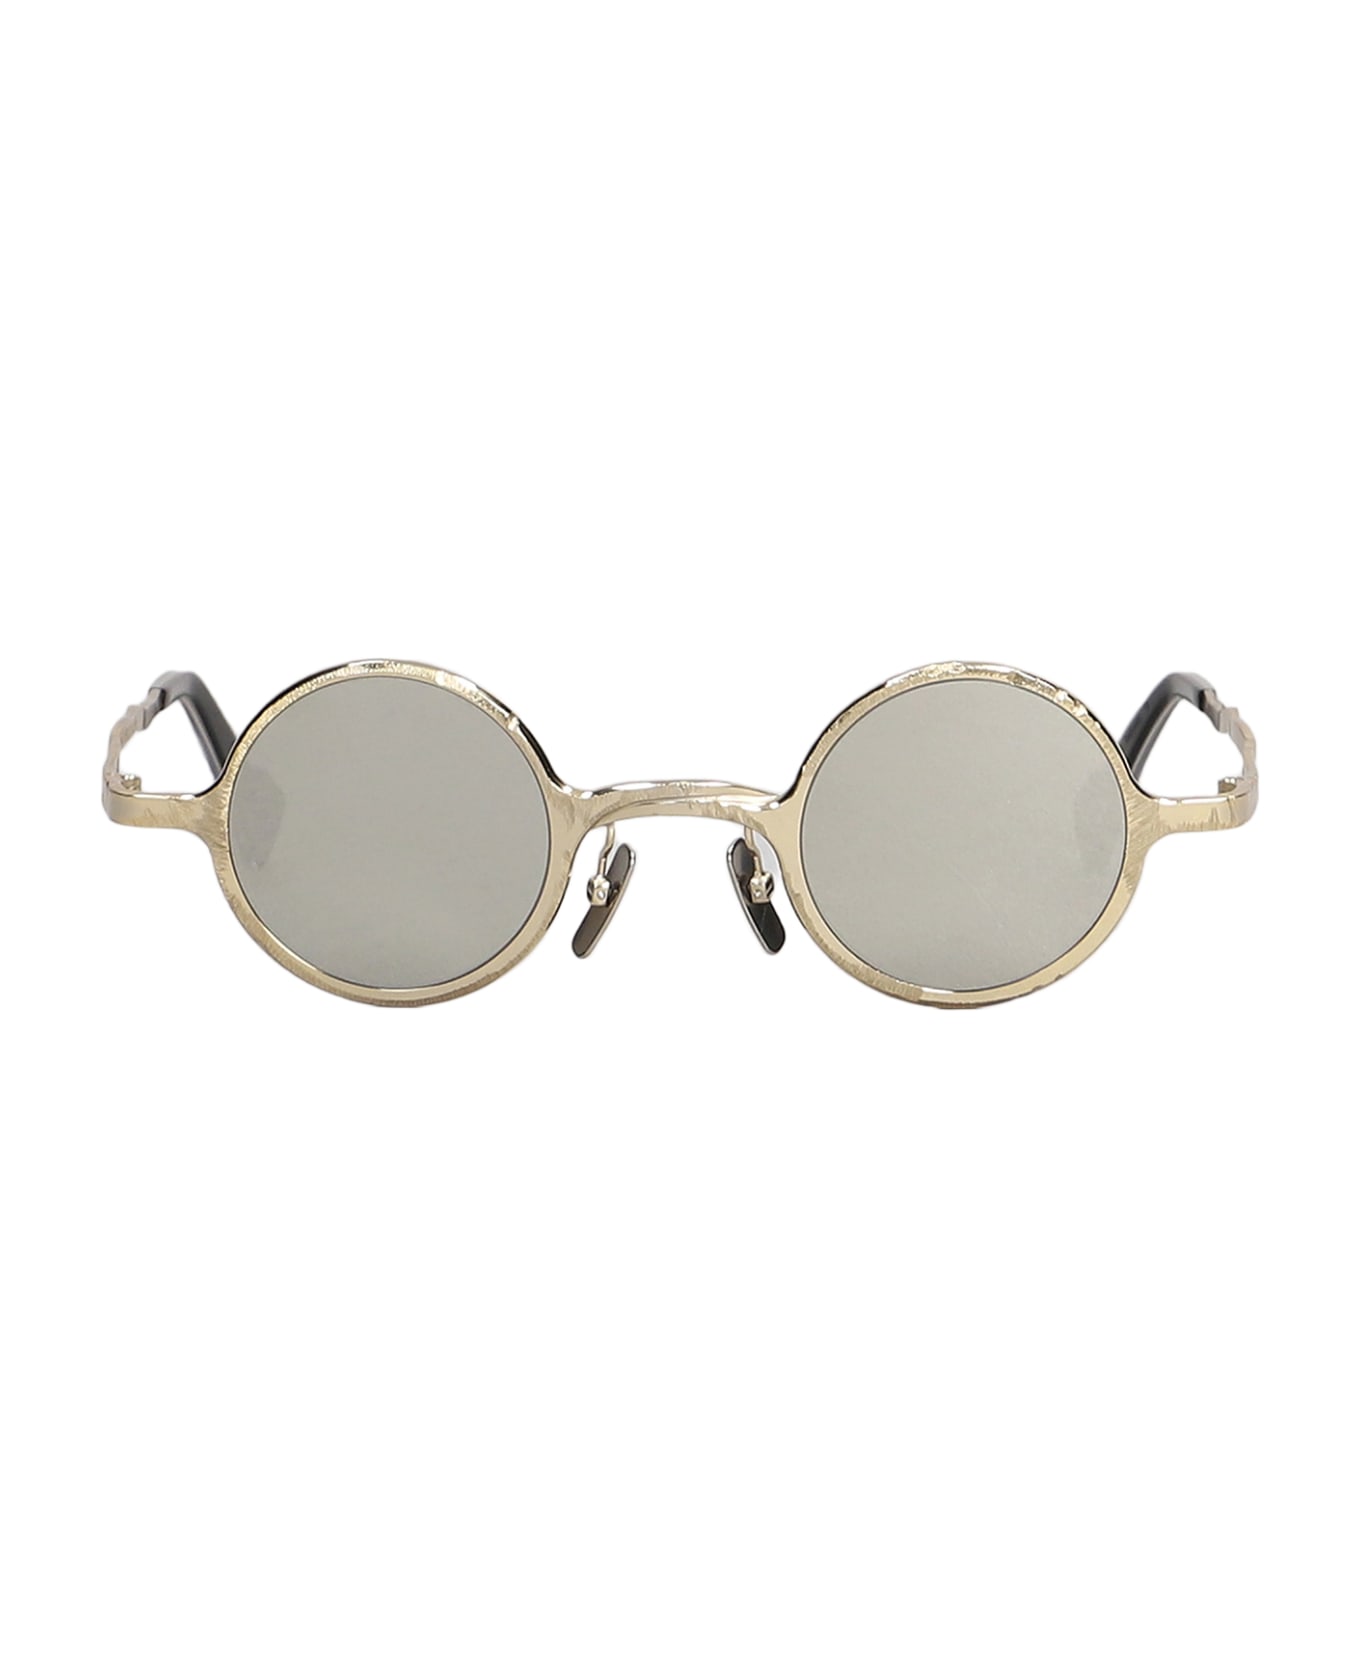 Kuboraum Z17 Sunglasses In Gold Metal Alloy - gold アイウェア